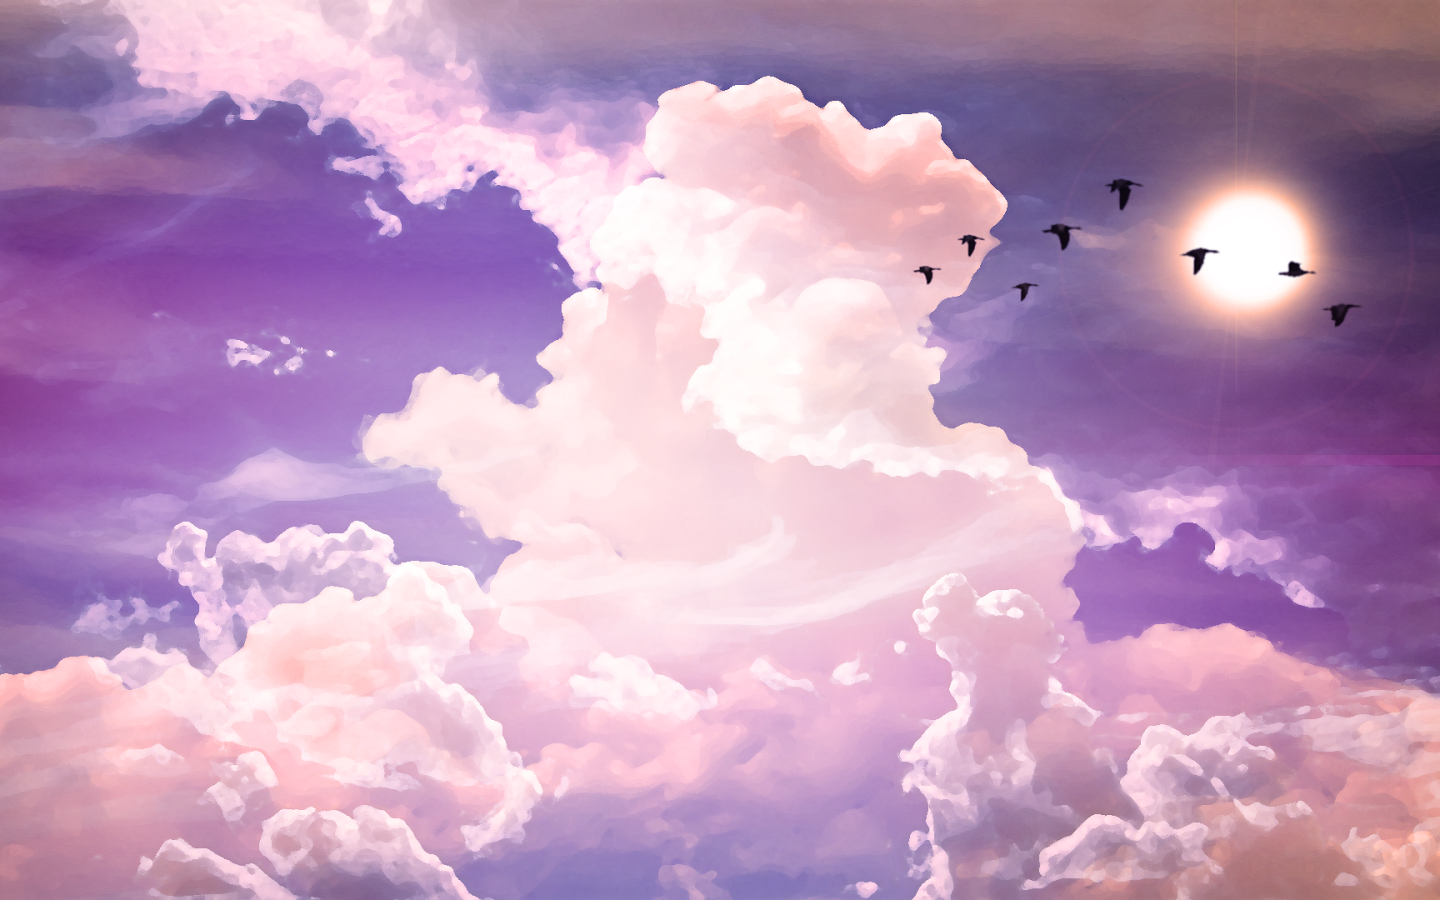 Free download HD wallpaper for desktop sky cloud wallpaper HD [1600x900] for your Desktop, Mobile & Tablet. Explore Cloud Wallpaper for Computer. Clouds Background Wallpaper, Wallpaper of Clouds, Free Cloud Wallpaper